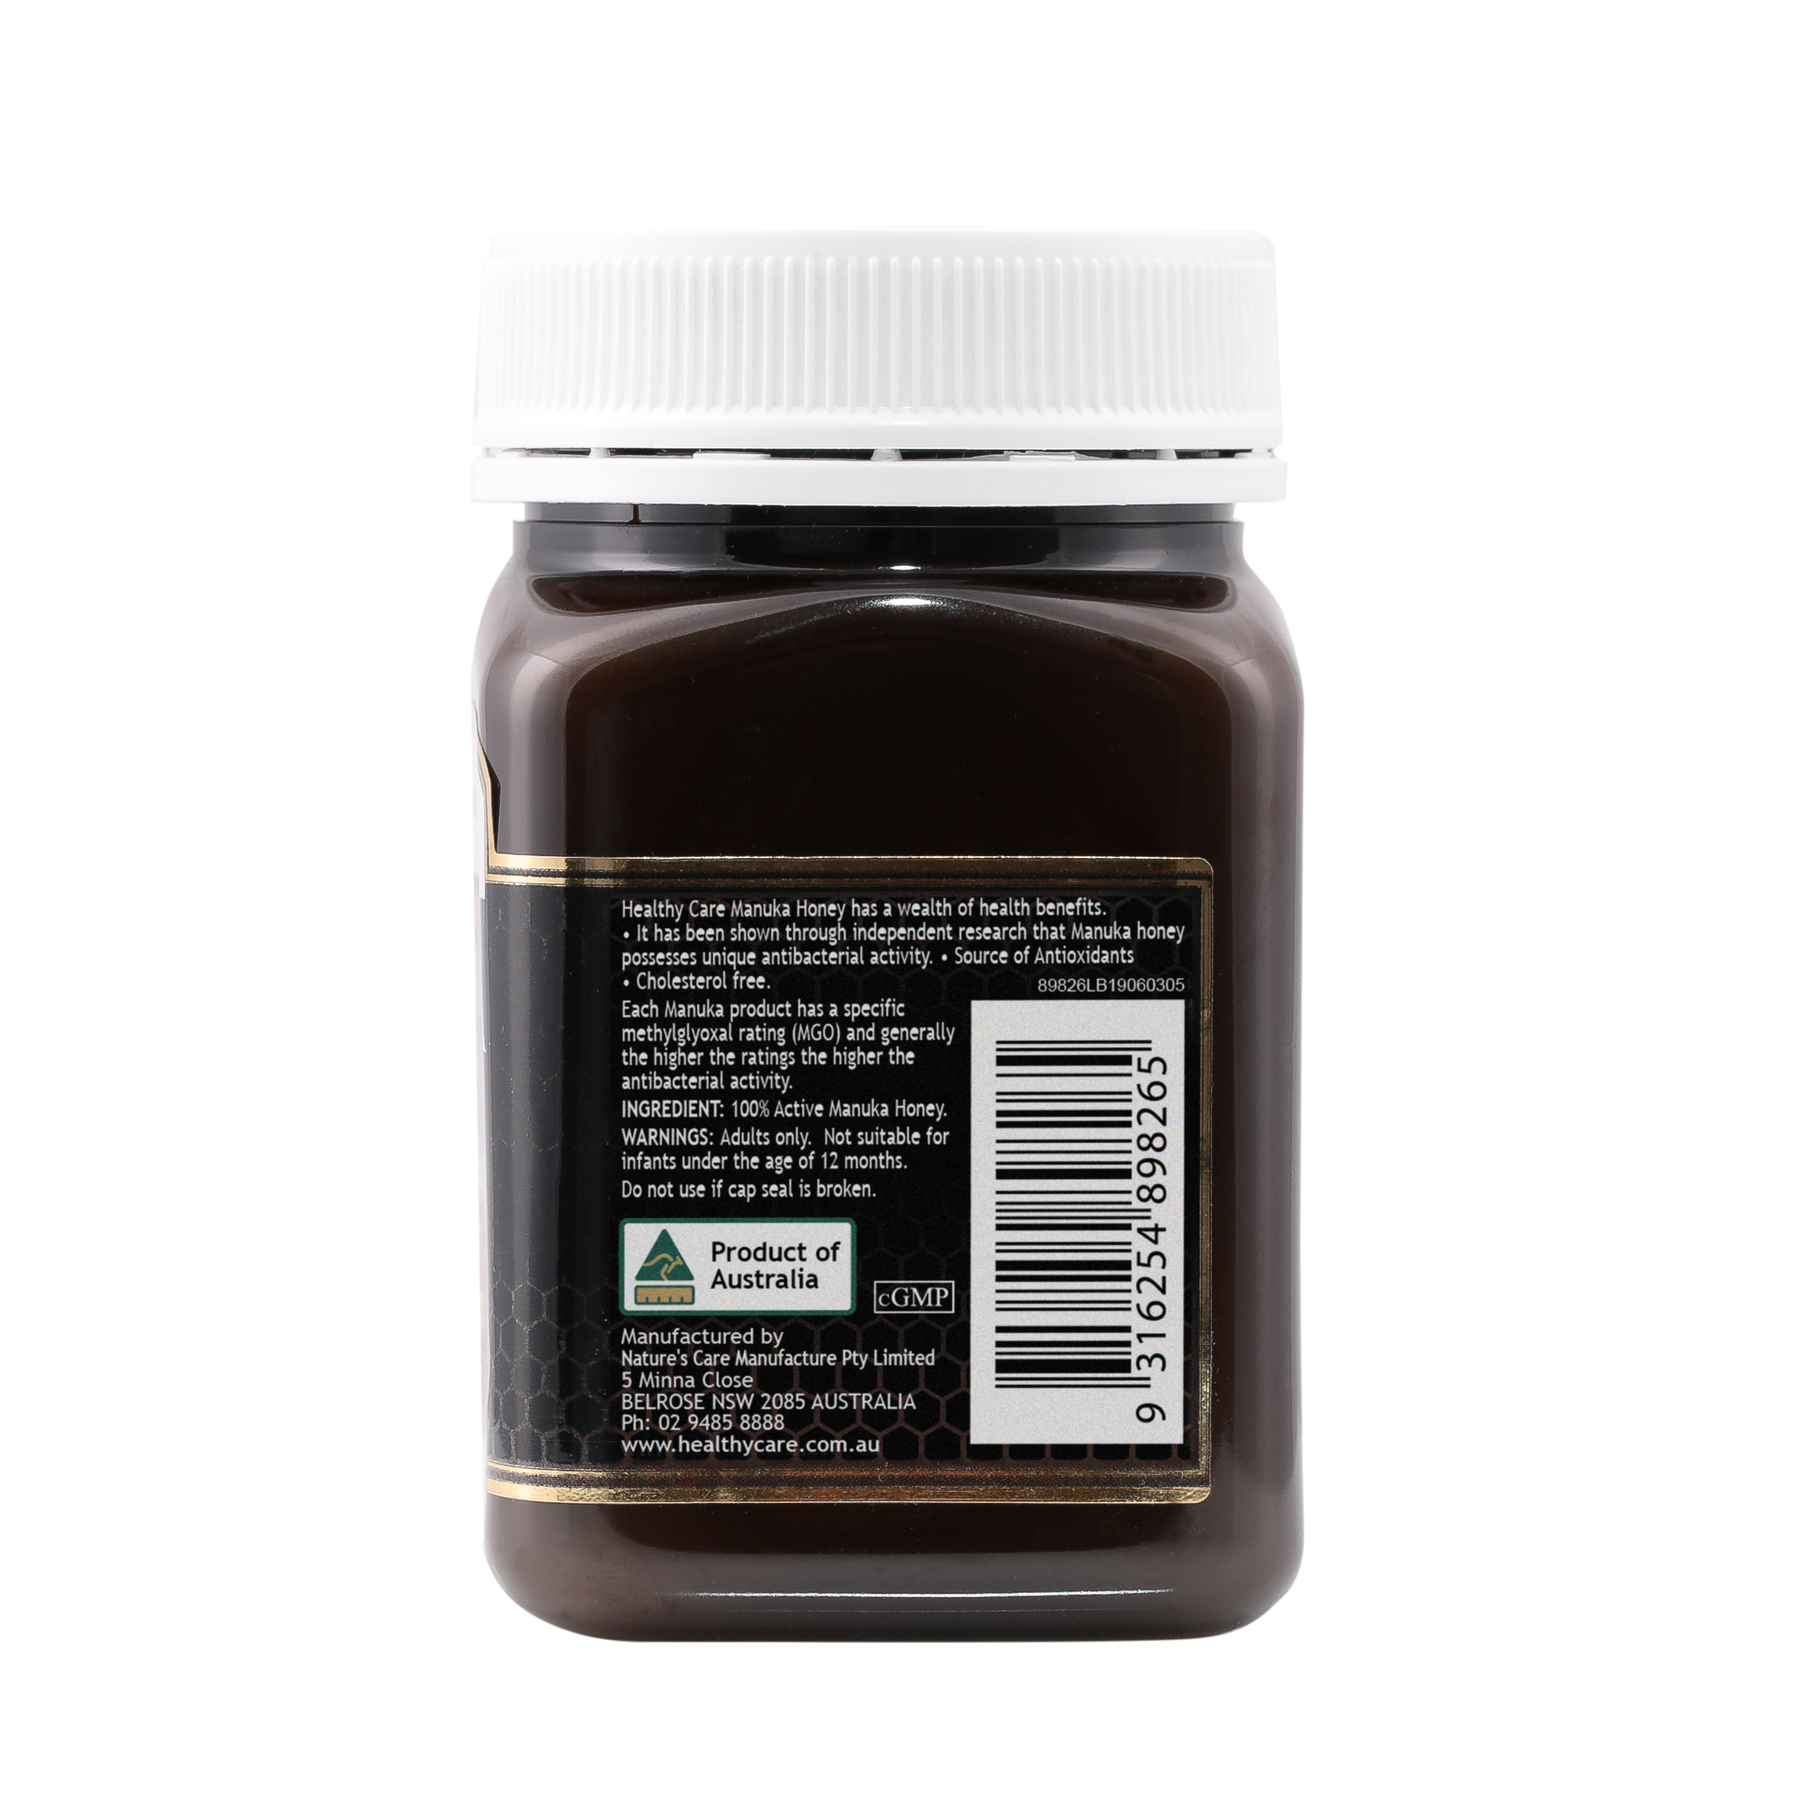 Healthy Care Manuka Honey MGO 220+ 12+ 500g